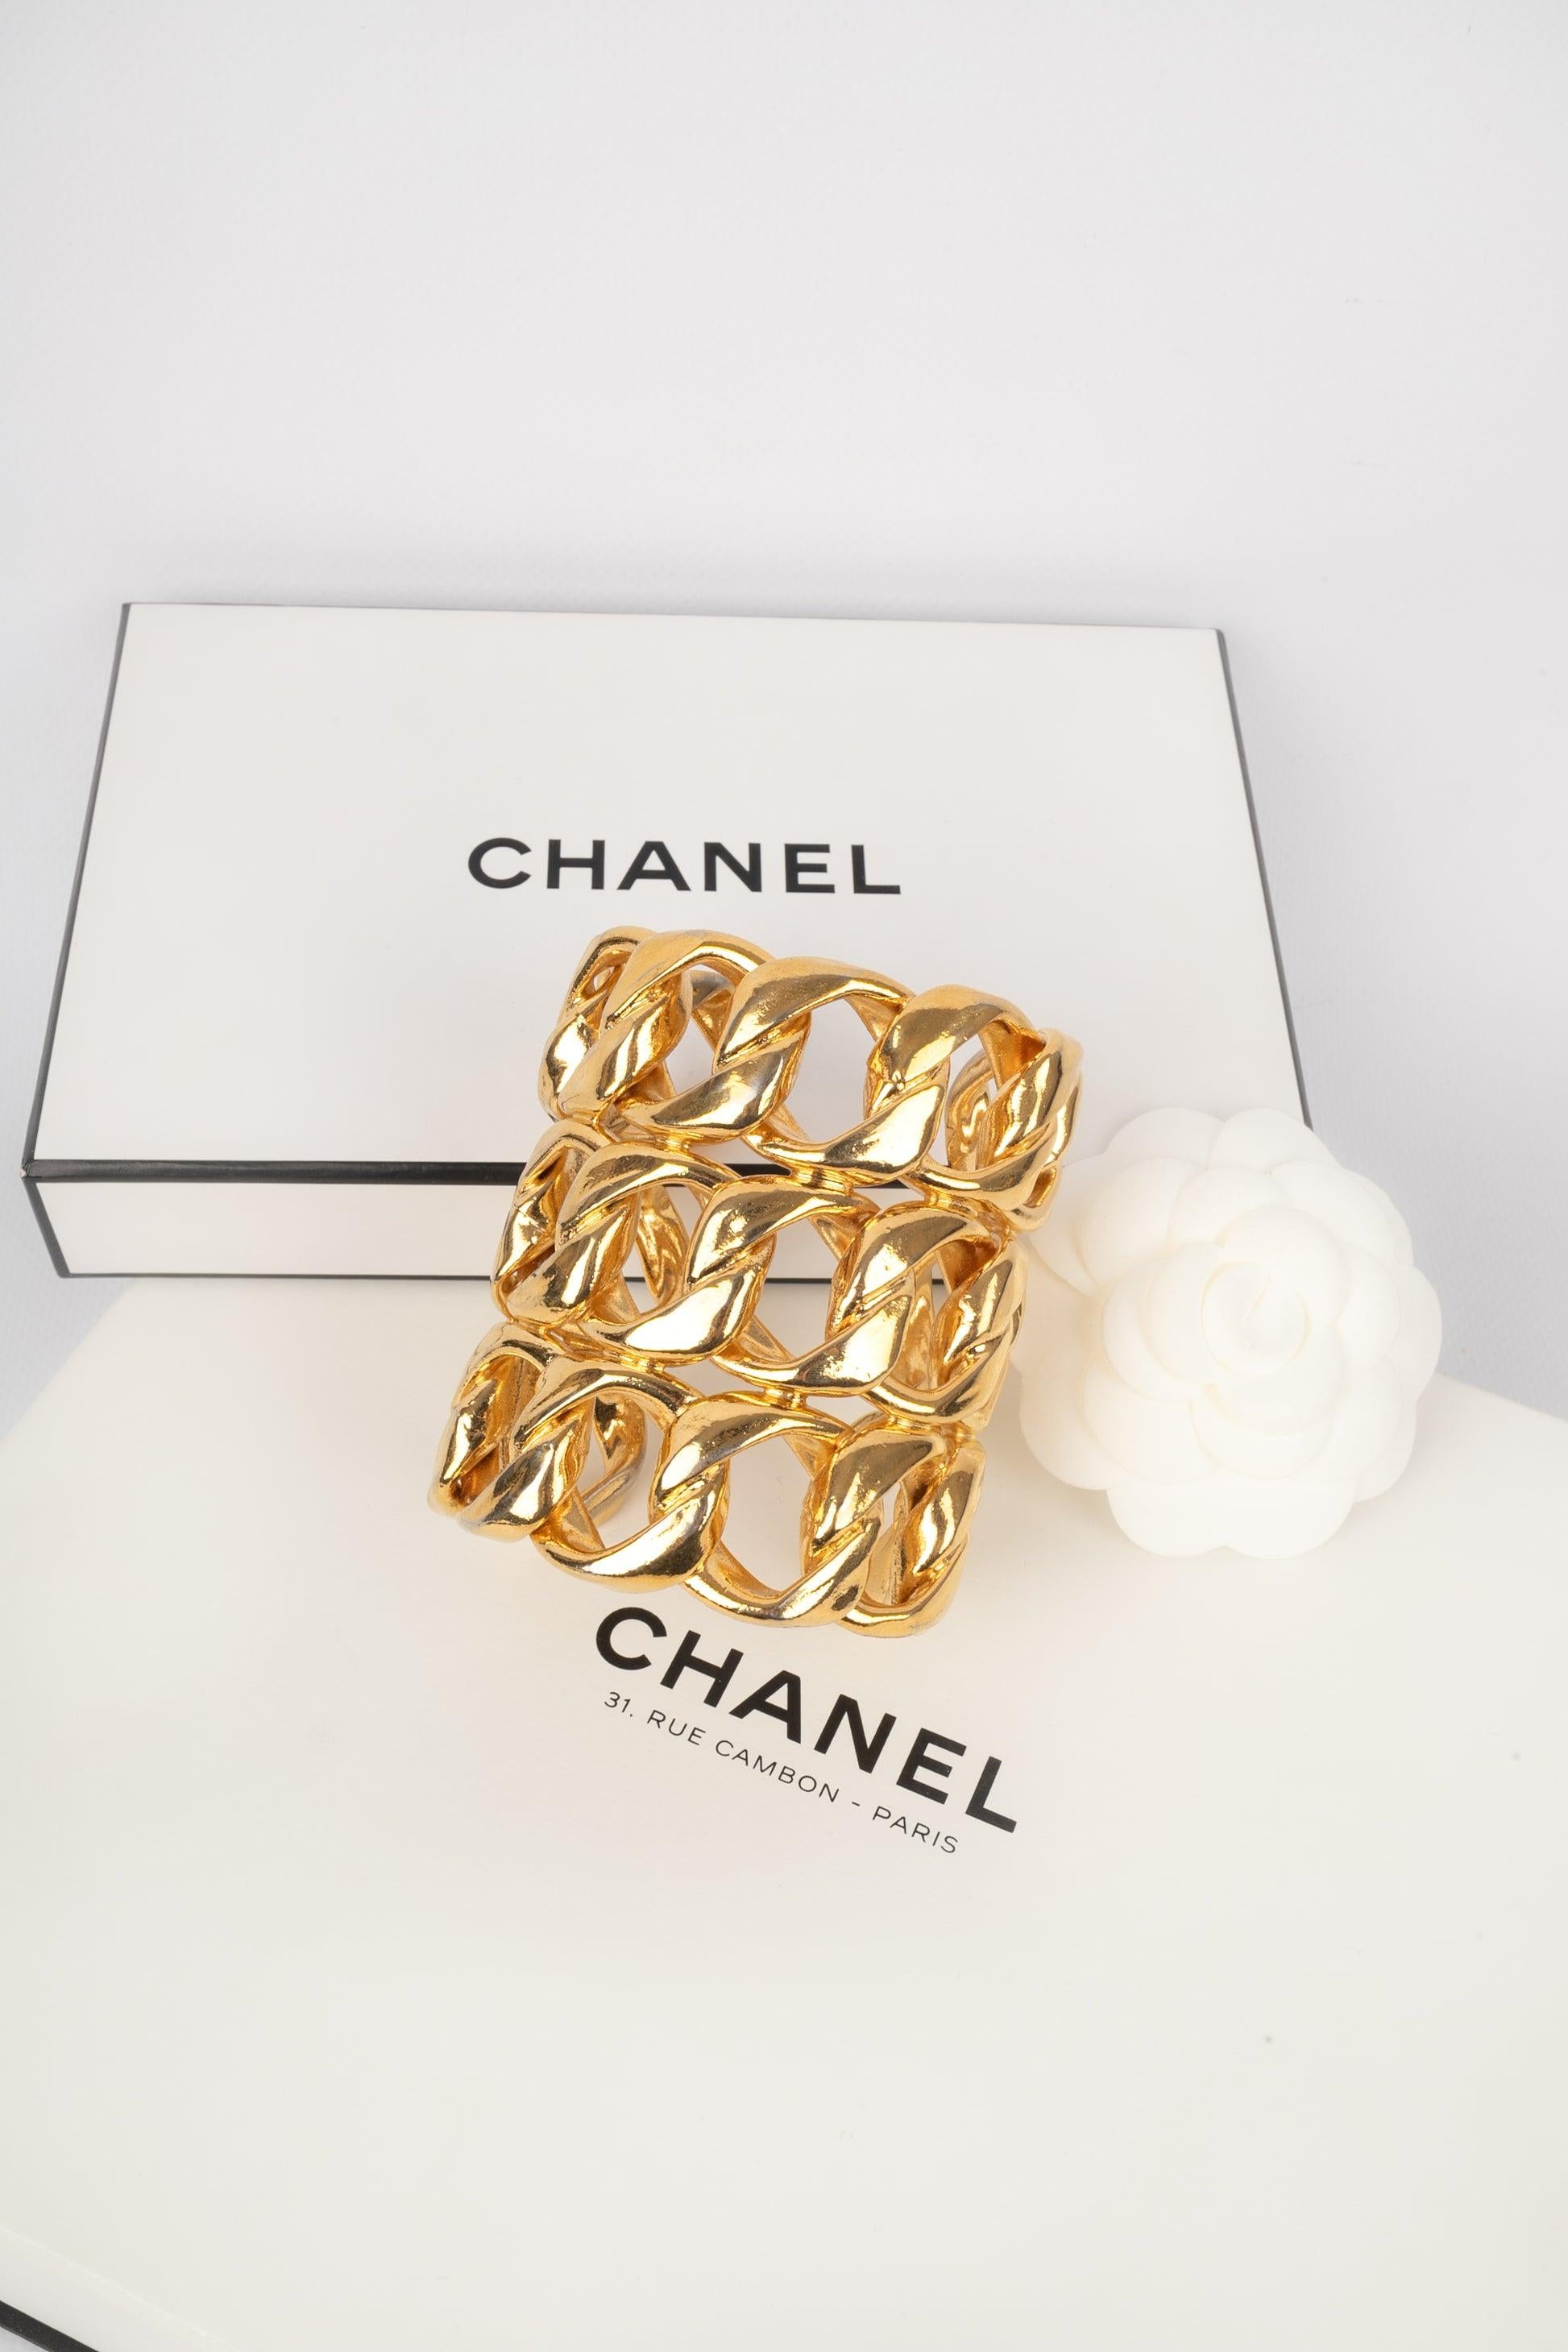 Chanel Golden Metal Chain Cuff Bracelet, 2003 For Sale 3